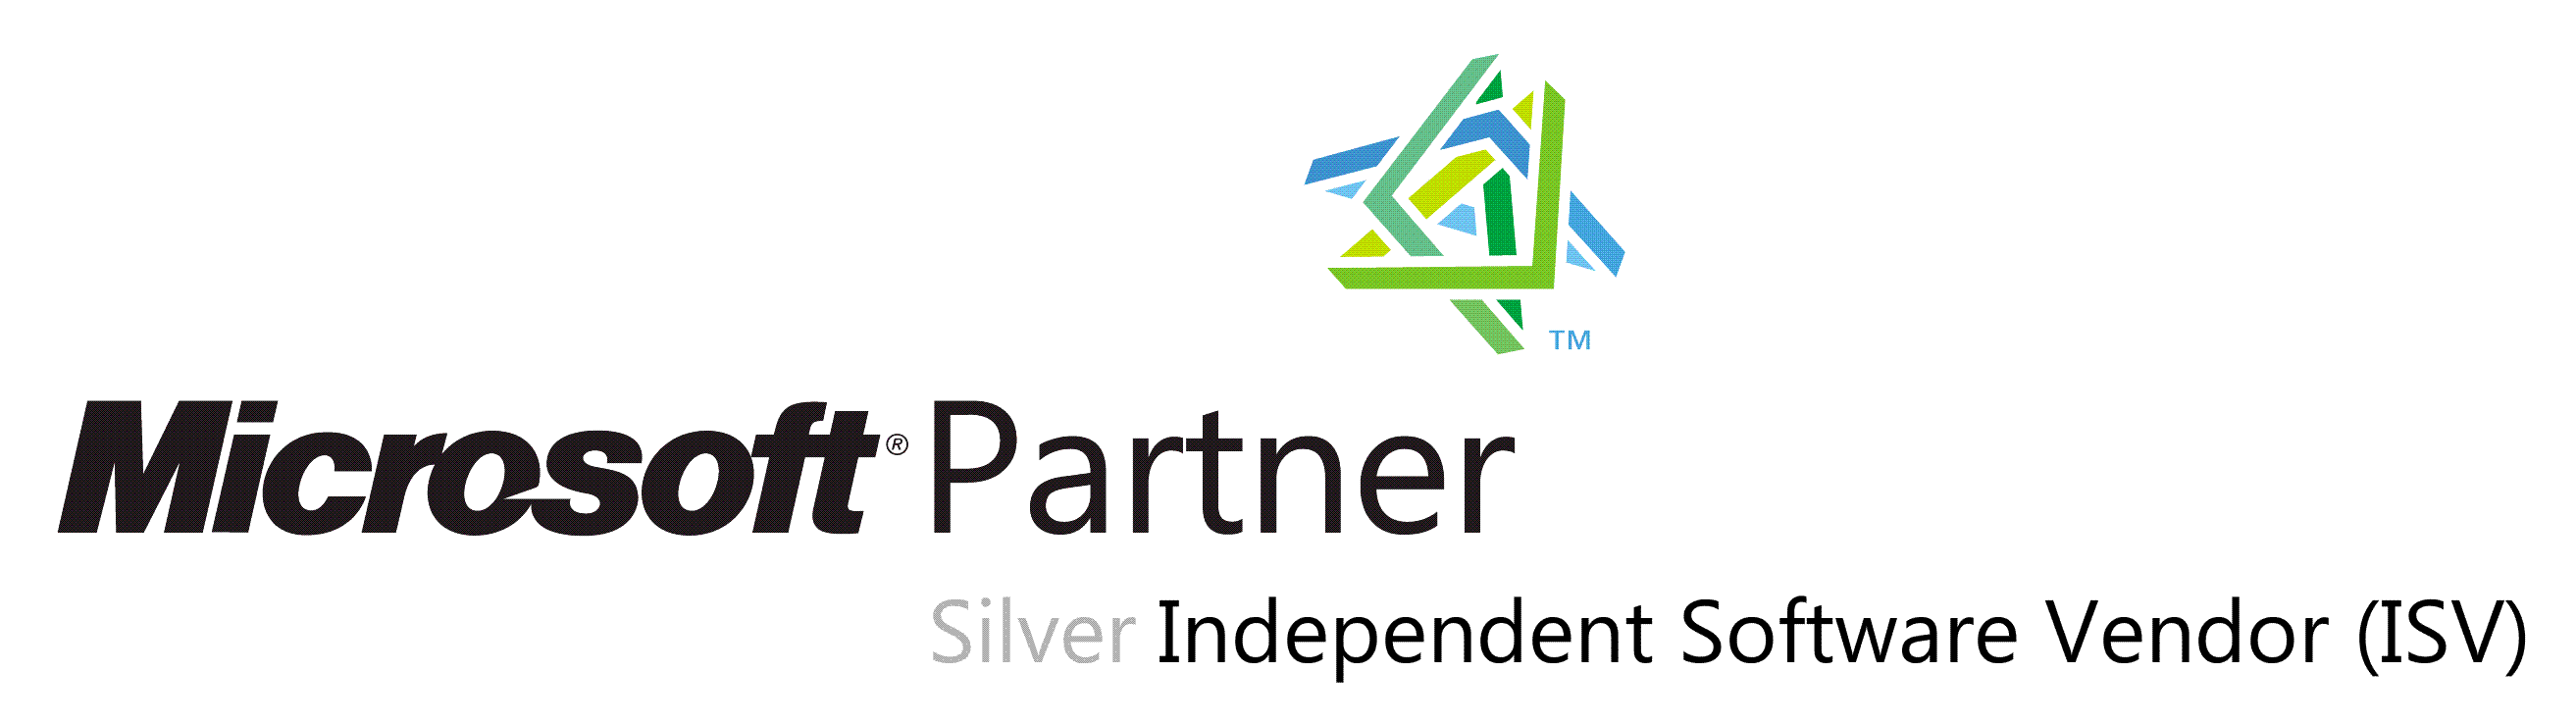 Microsoft Partner (ISV)